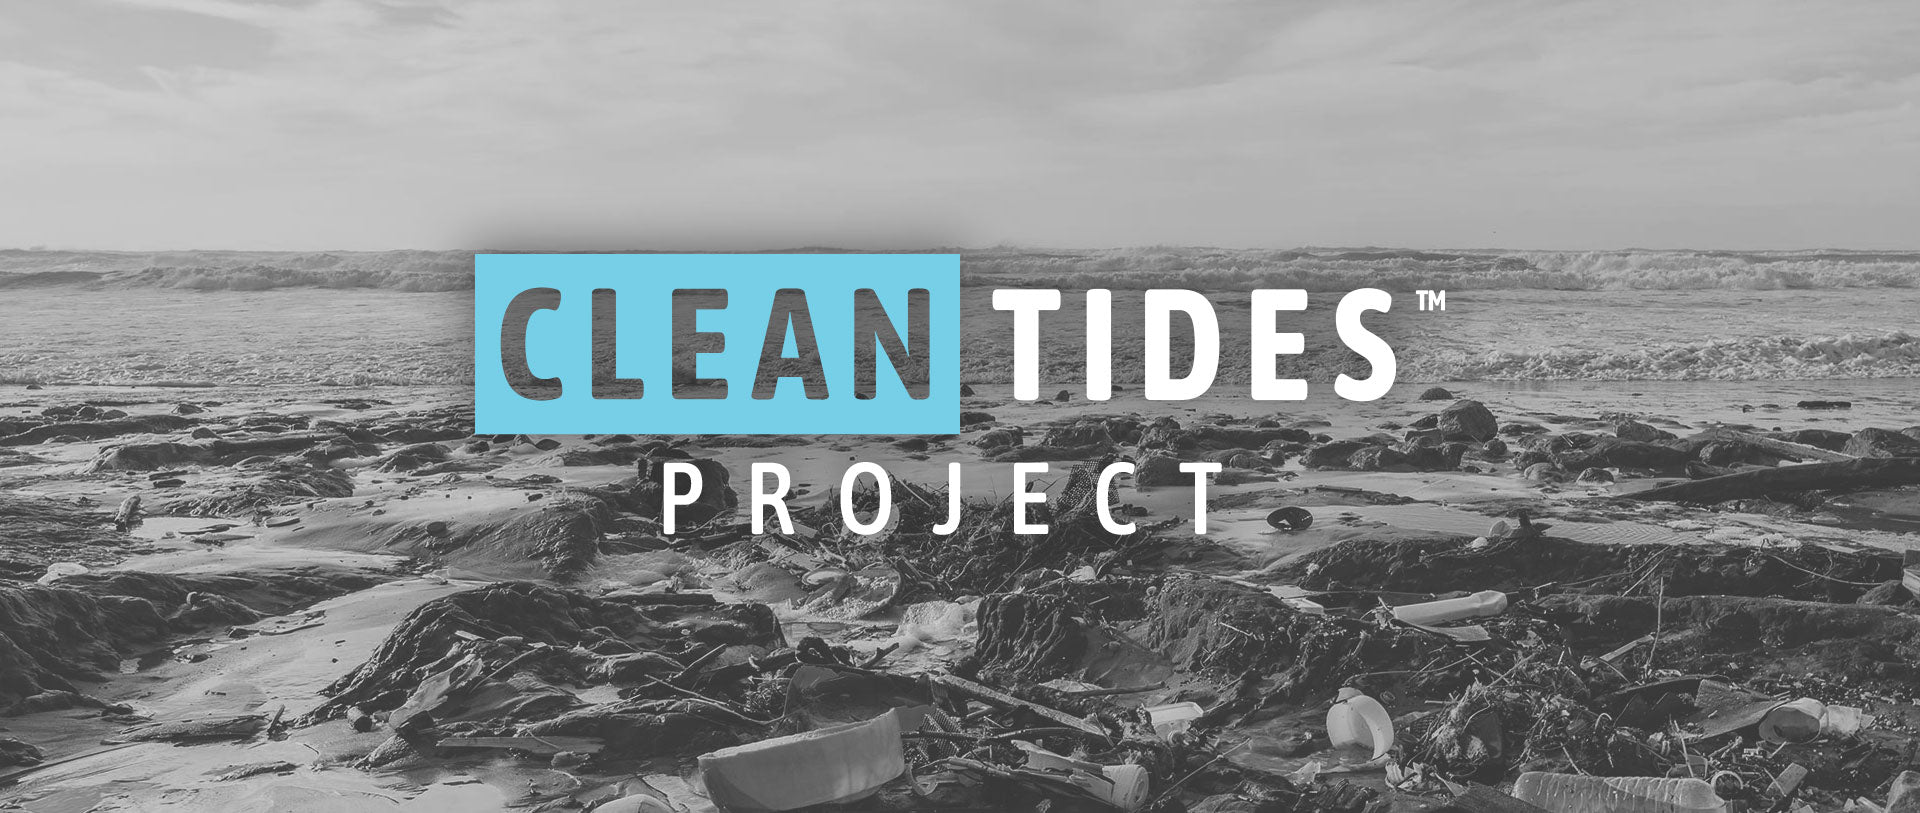 Clean Tides Project